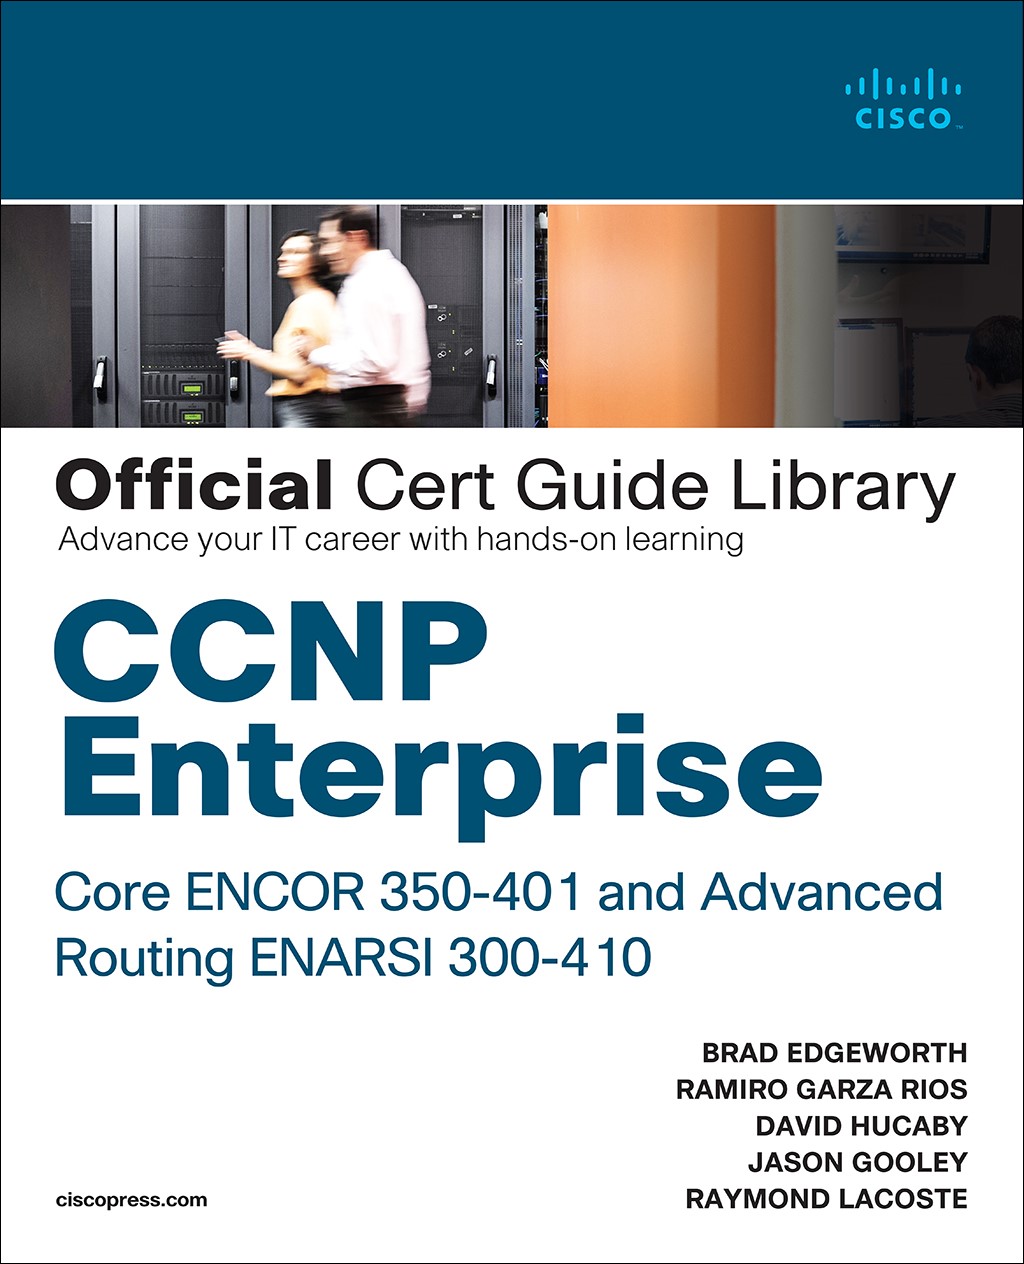 ccnp encor pdf download